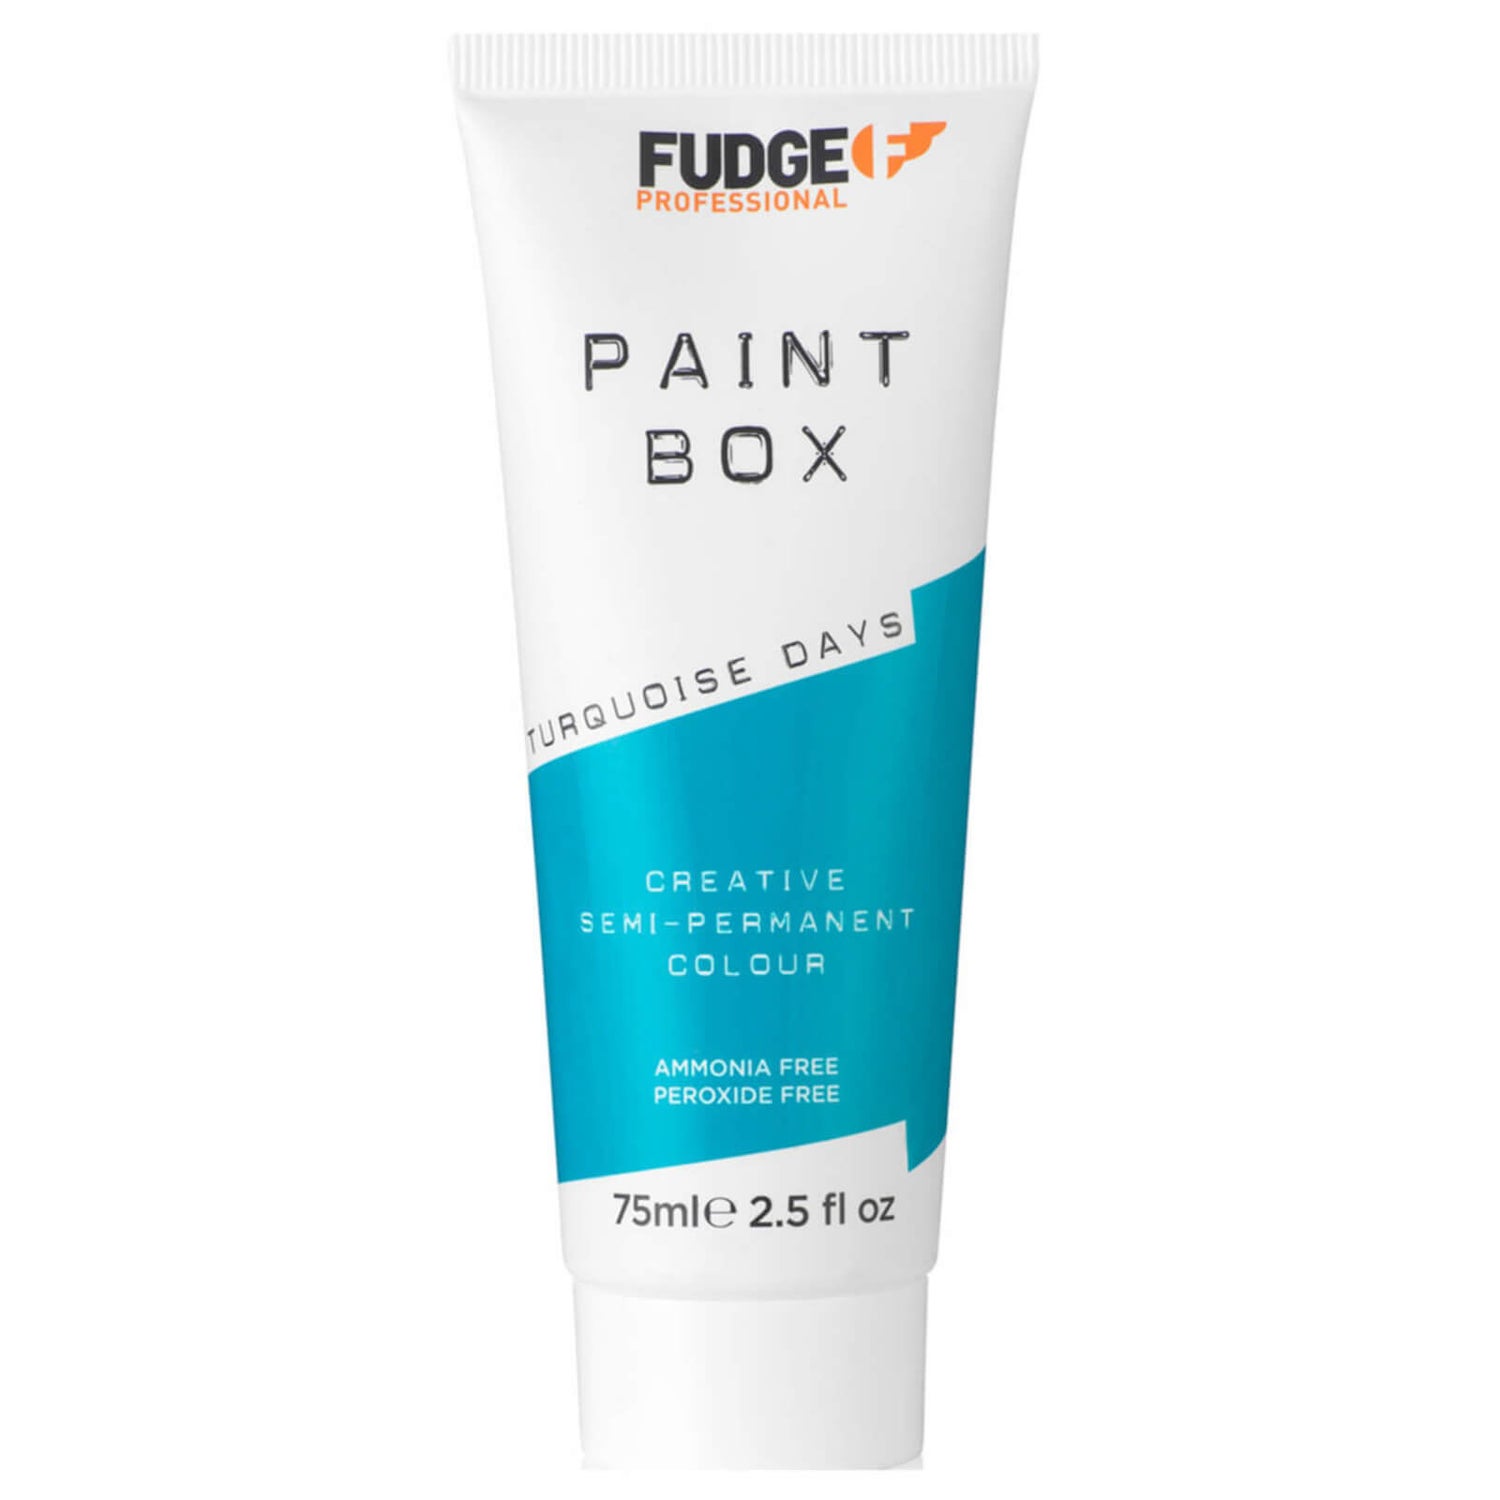 Fudge Paintbox Hair Colorant 75ml - Turquoise Days